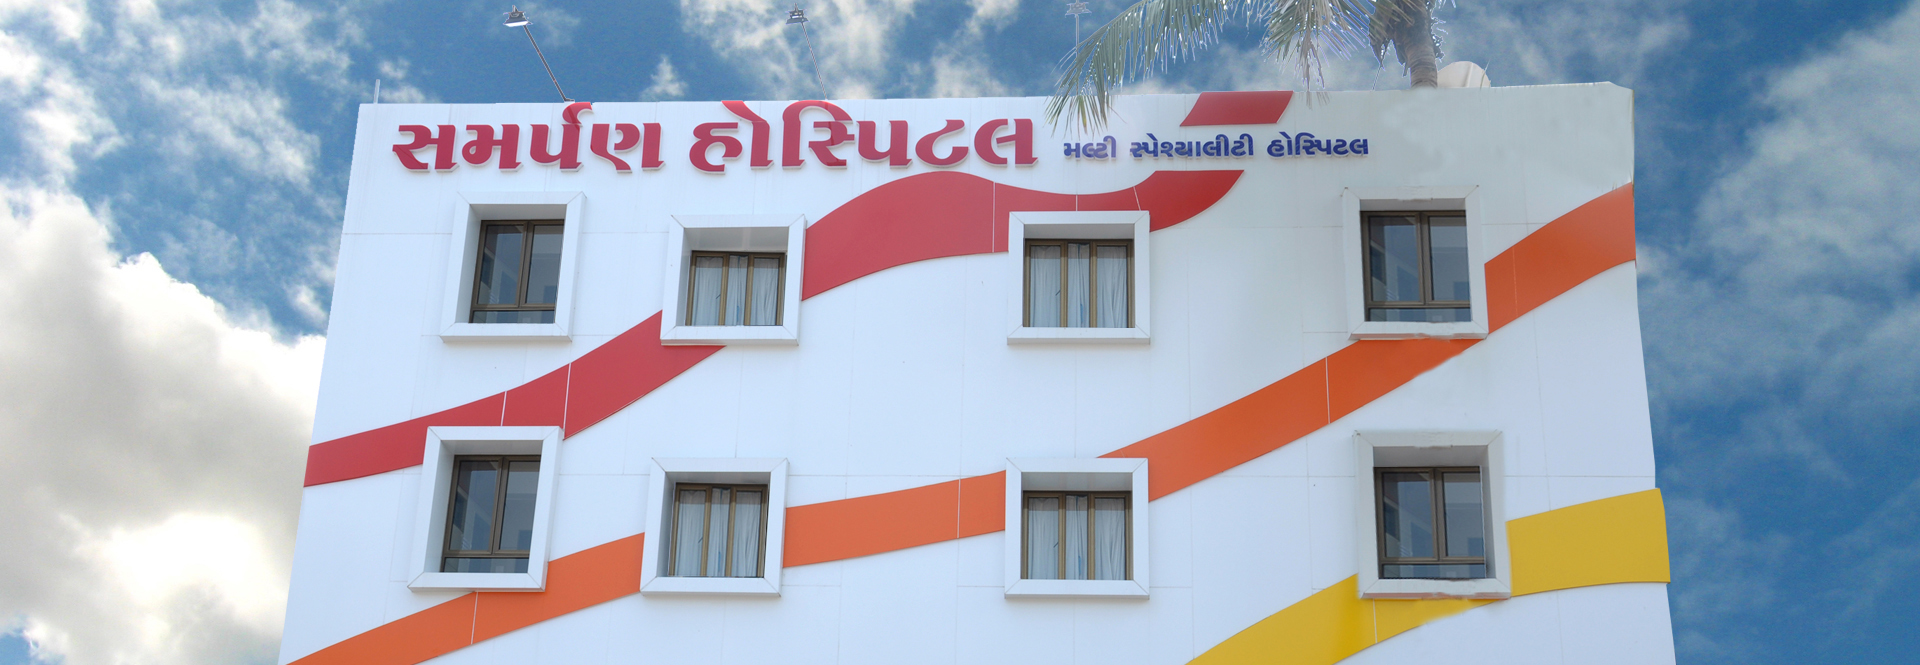 Best Multispeciality hospital in vadodara